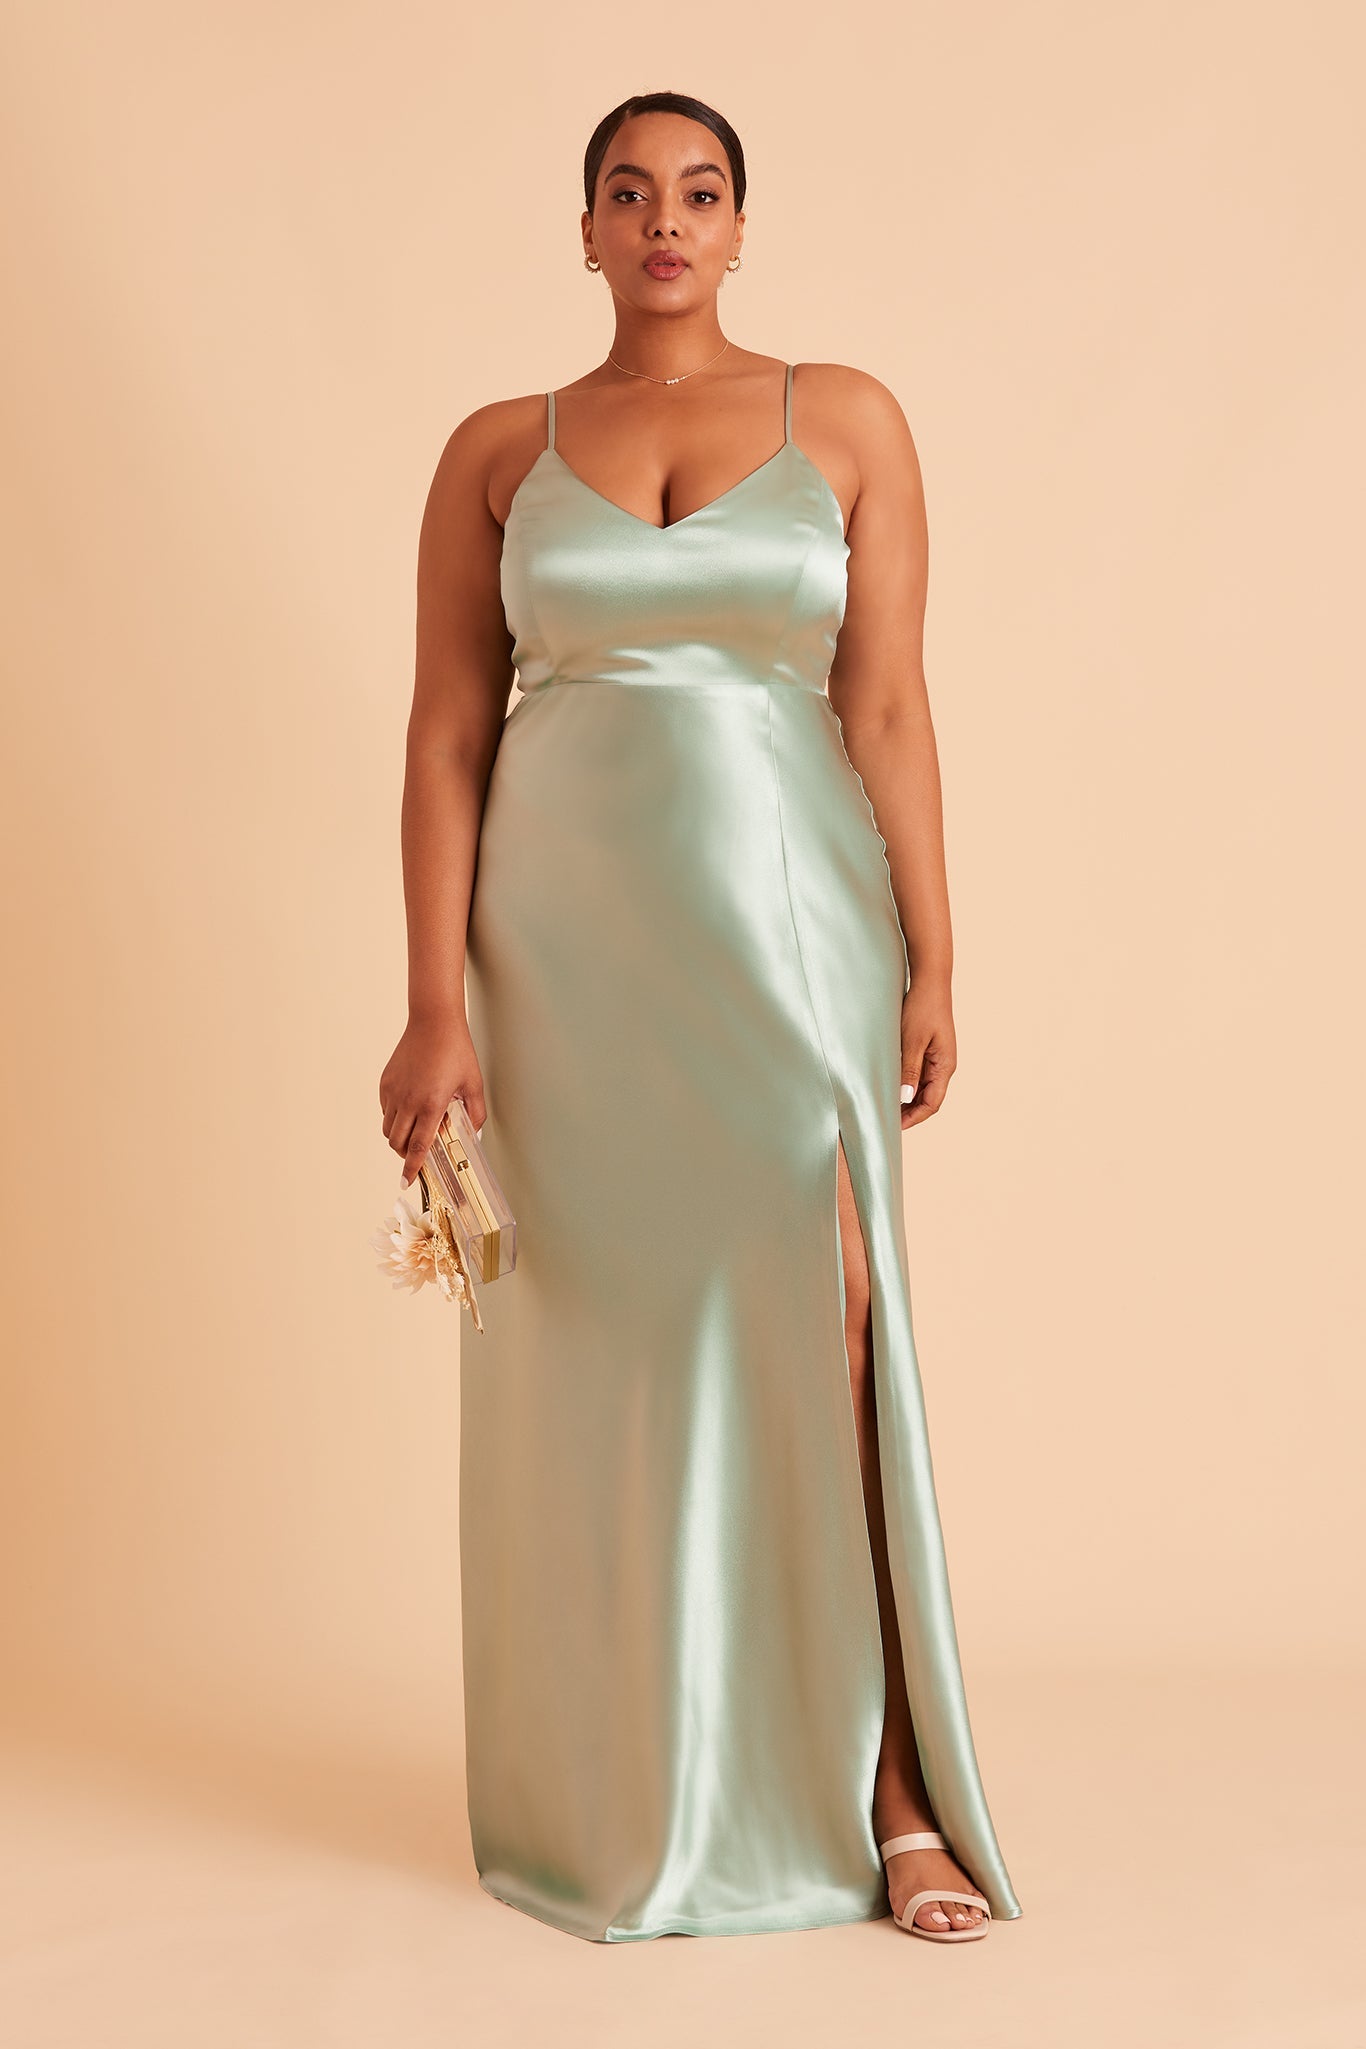 Jay Satin Bridesmaid Dress in Sage | Birdy Grey